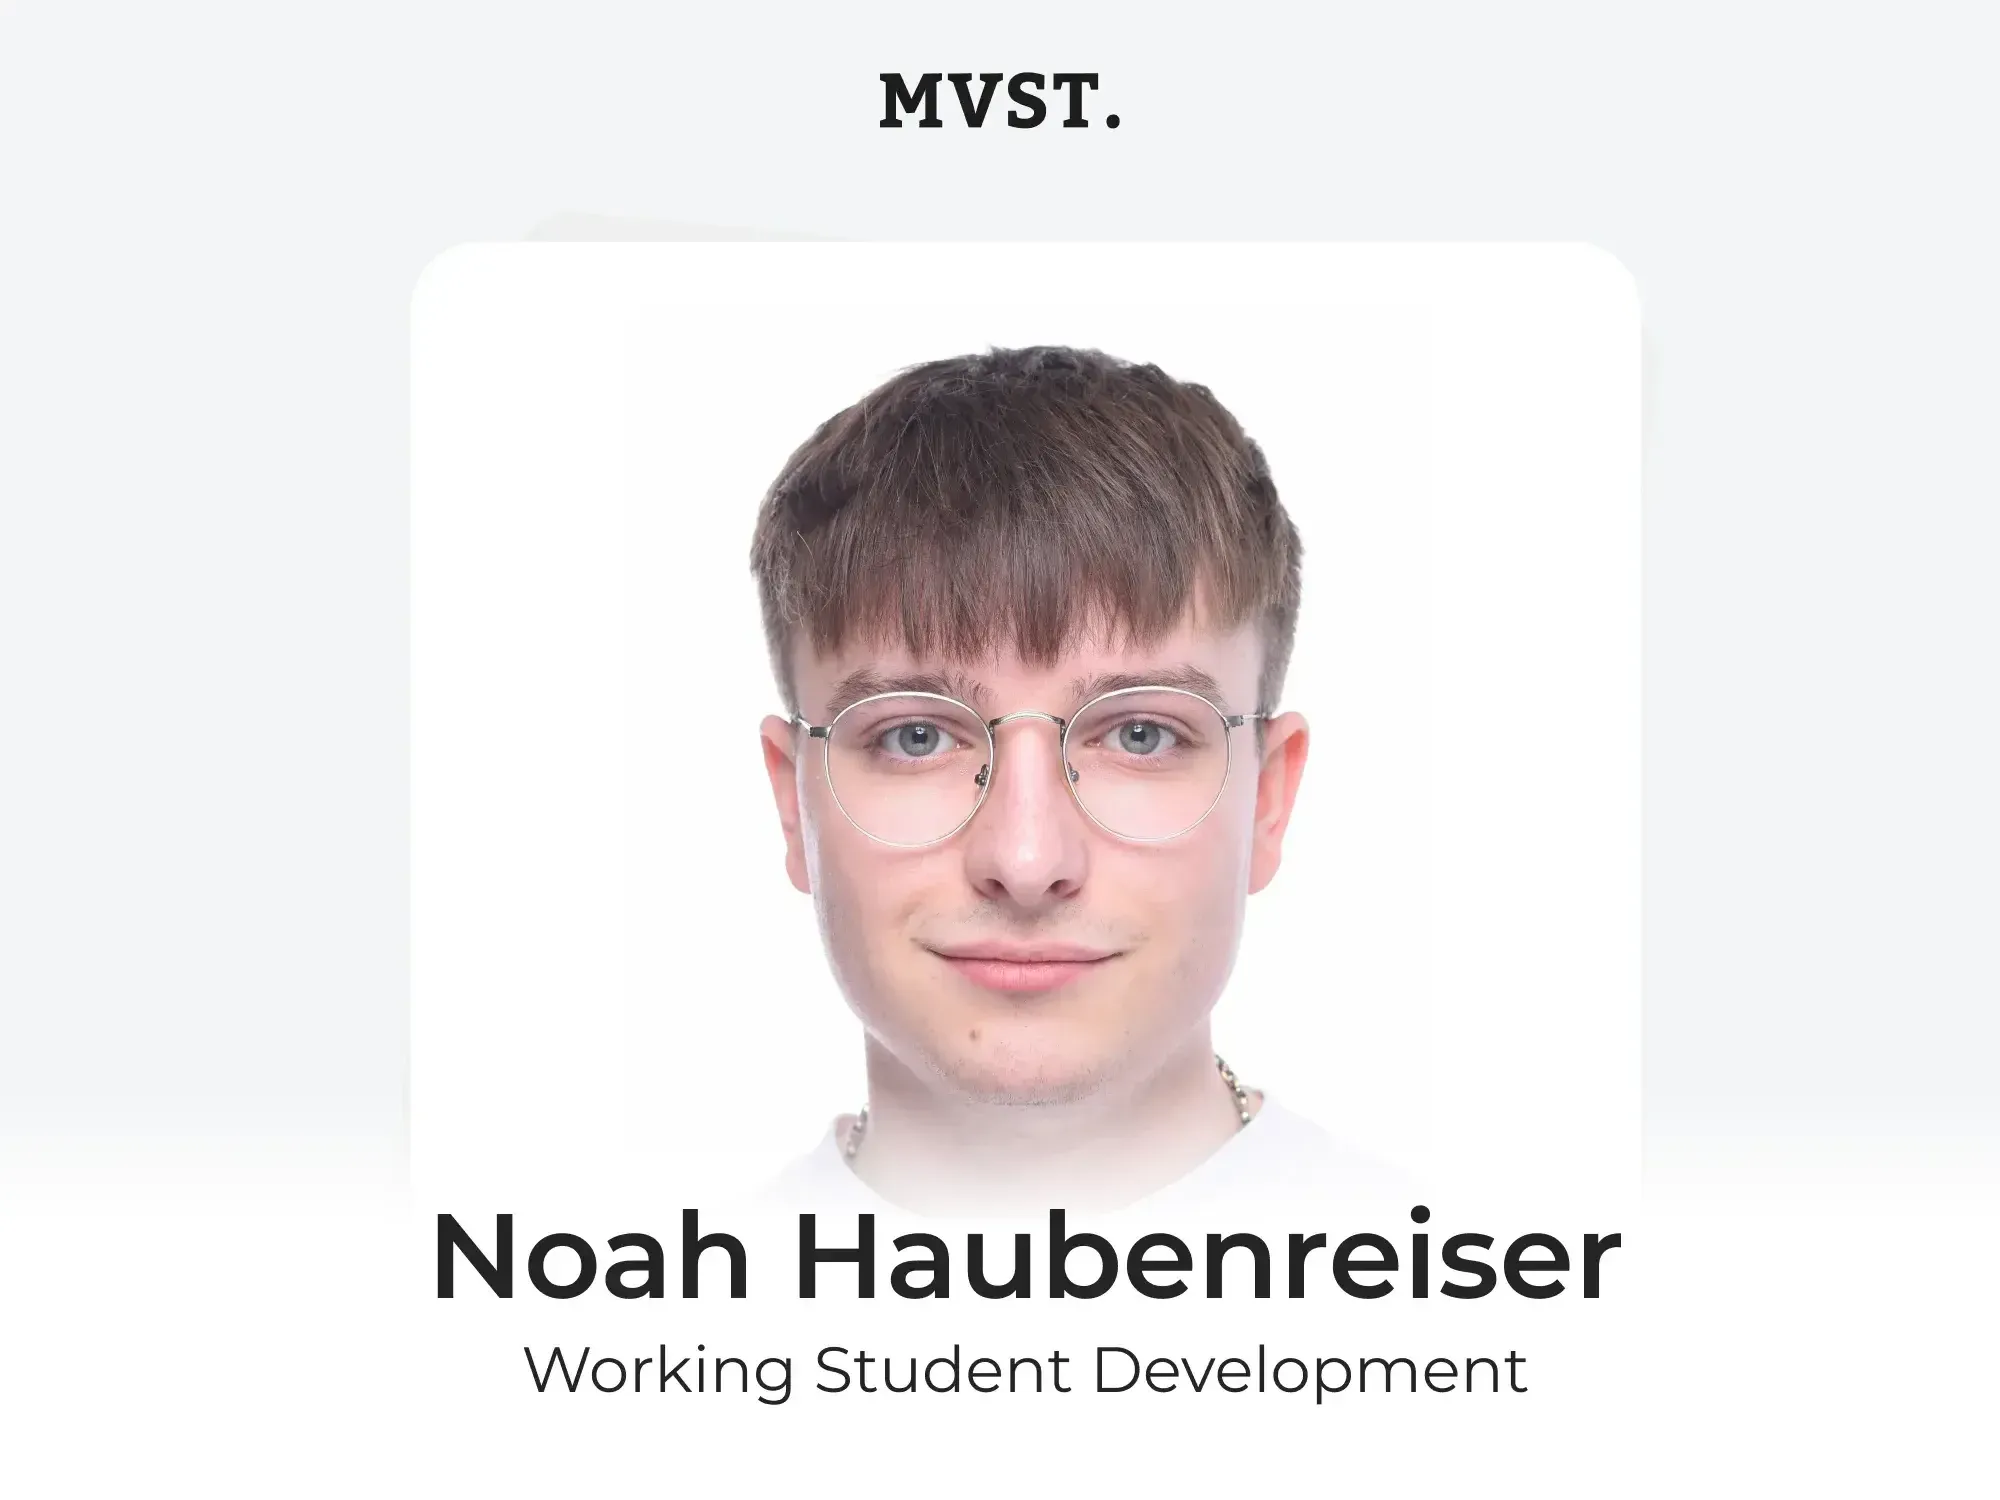 Welcome to MVST, Noah!